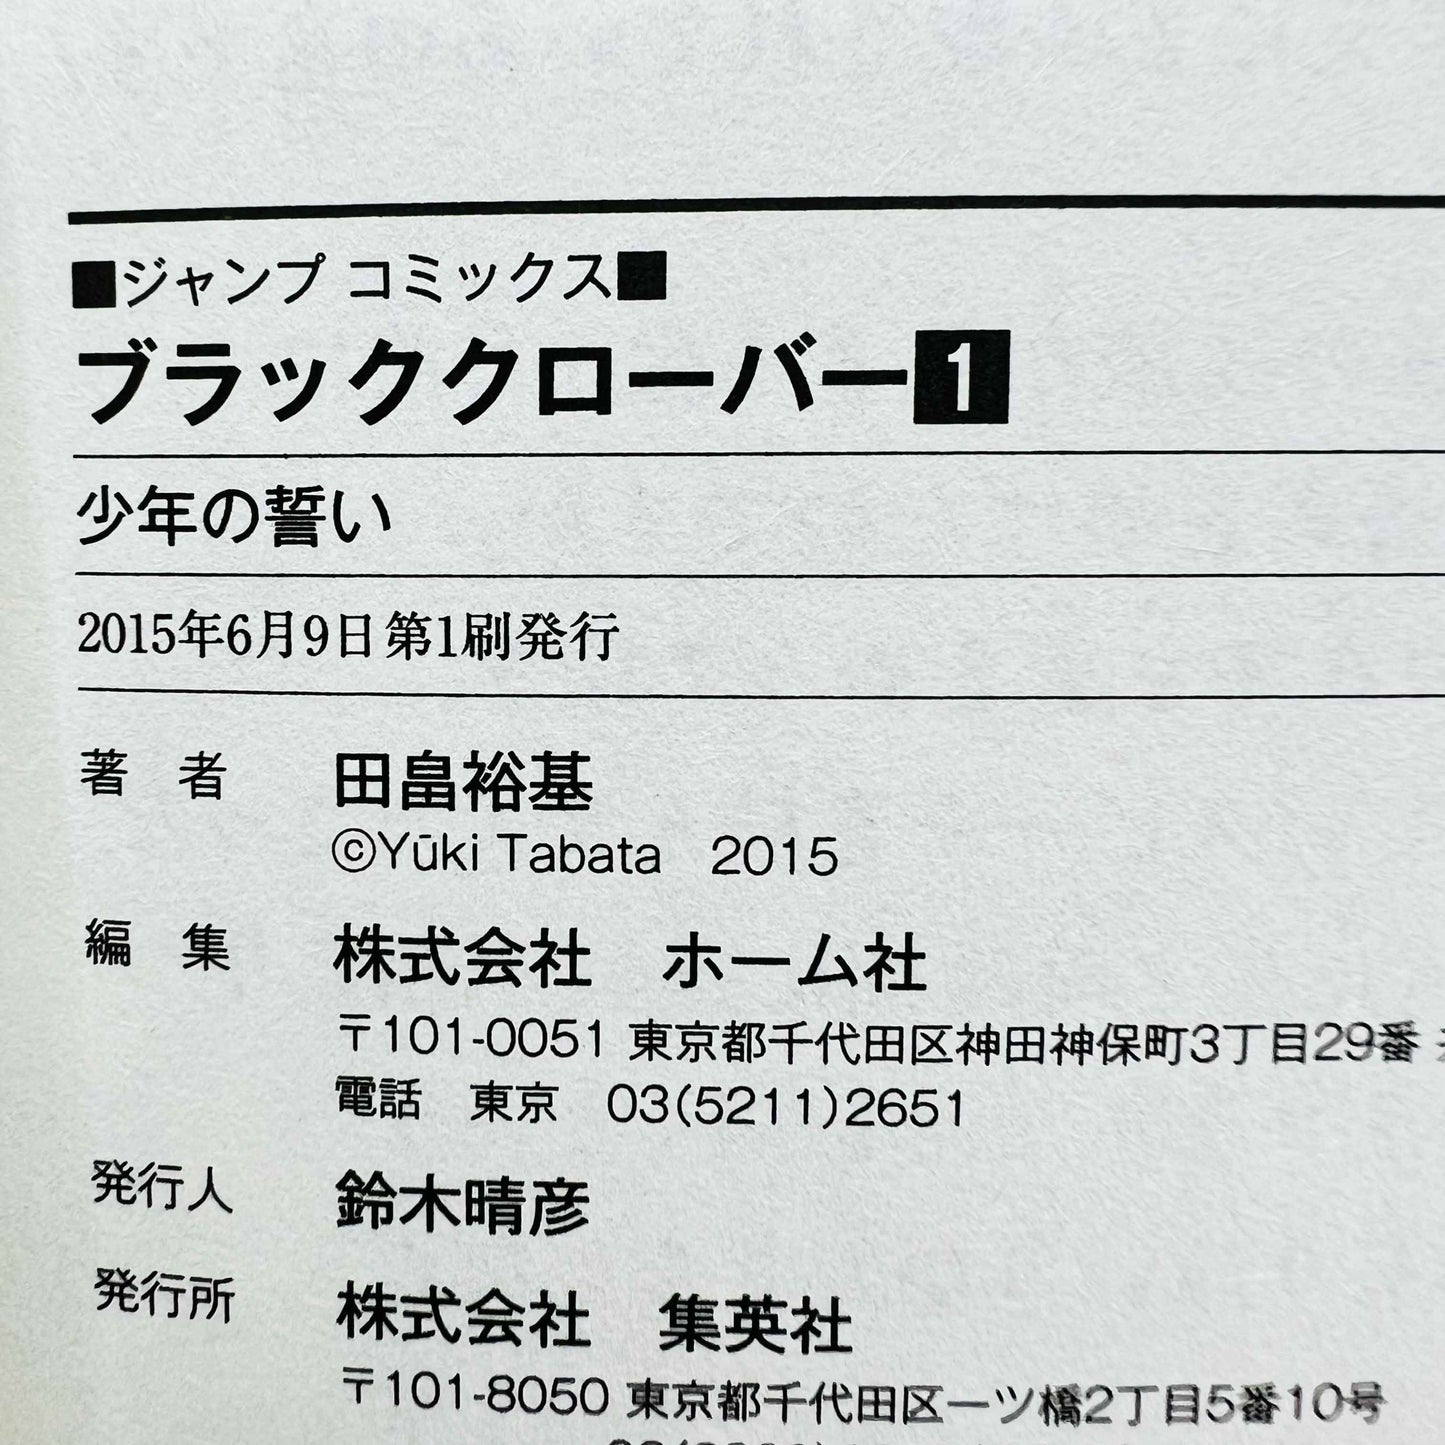 「Wish - Reserved」Black Clover - Volume 01 /w Obi - 1stPrint.net - 1st First Print Edition Manga Store - M-BLACKCLOVER-01-006